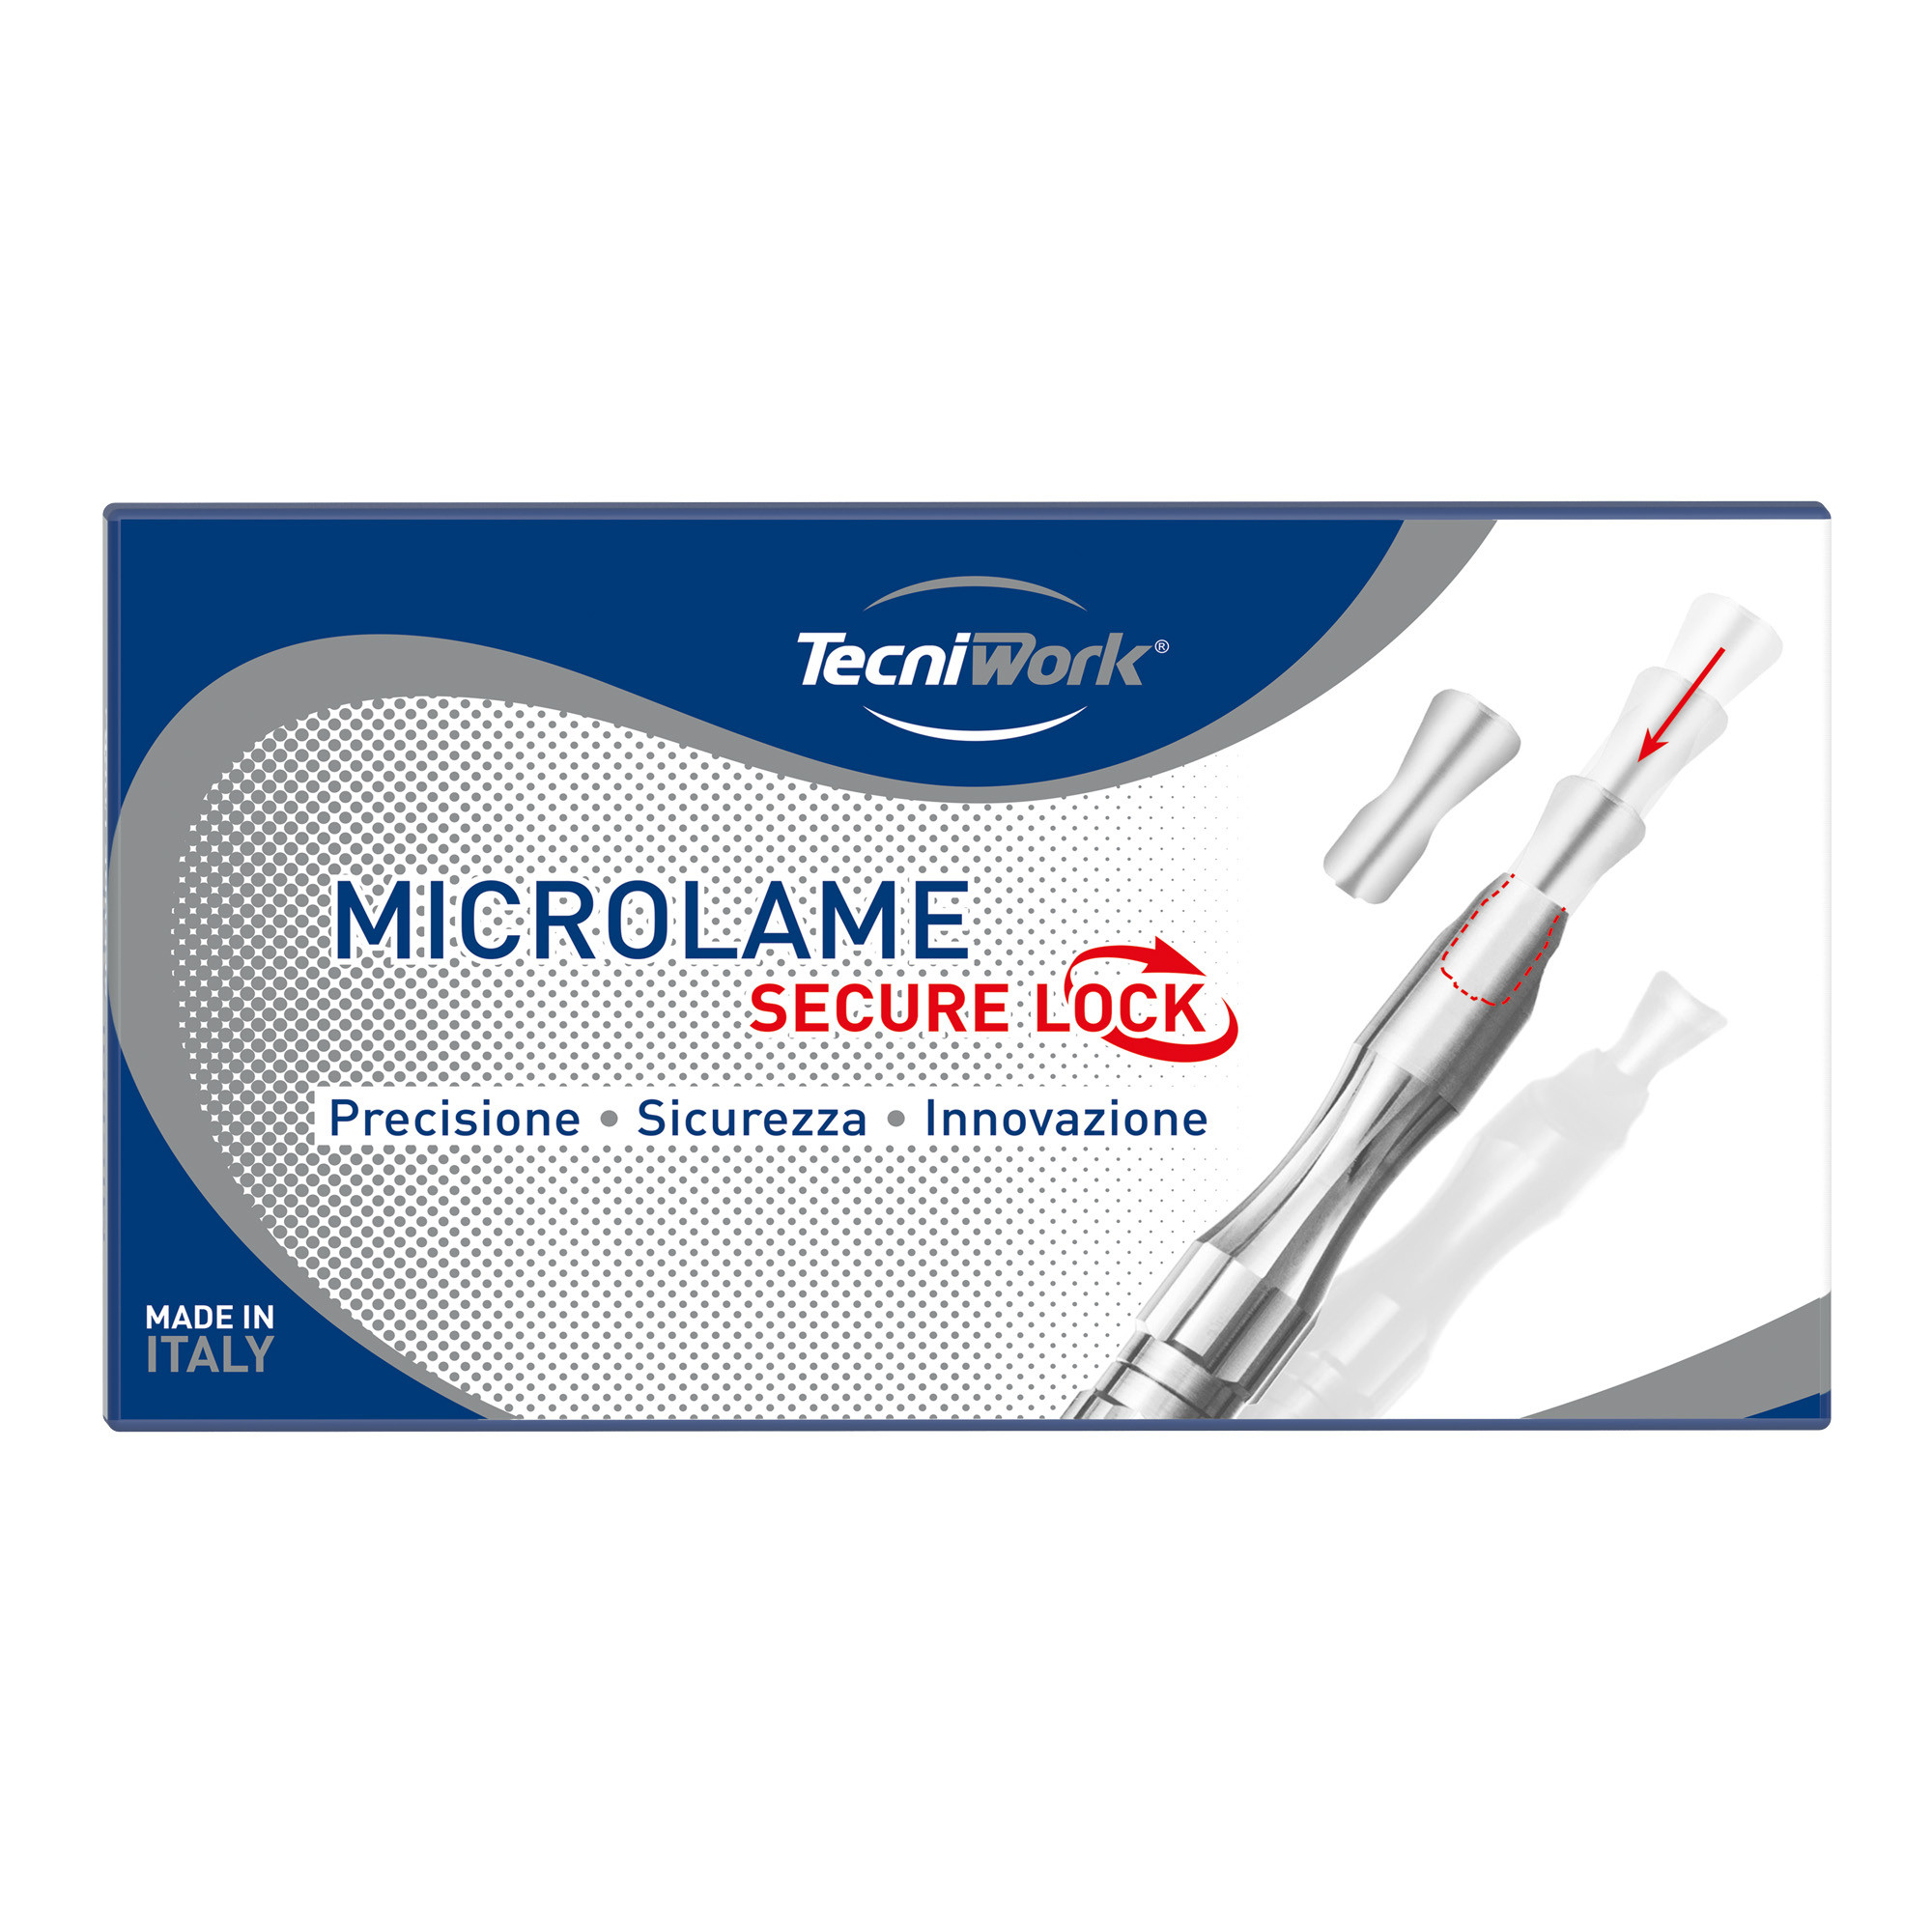 Microlame professionali singole sterili e monouso Secure Lock misura 0 50 pz